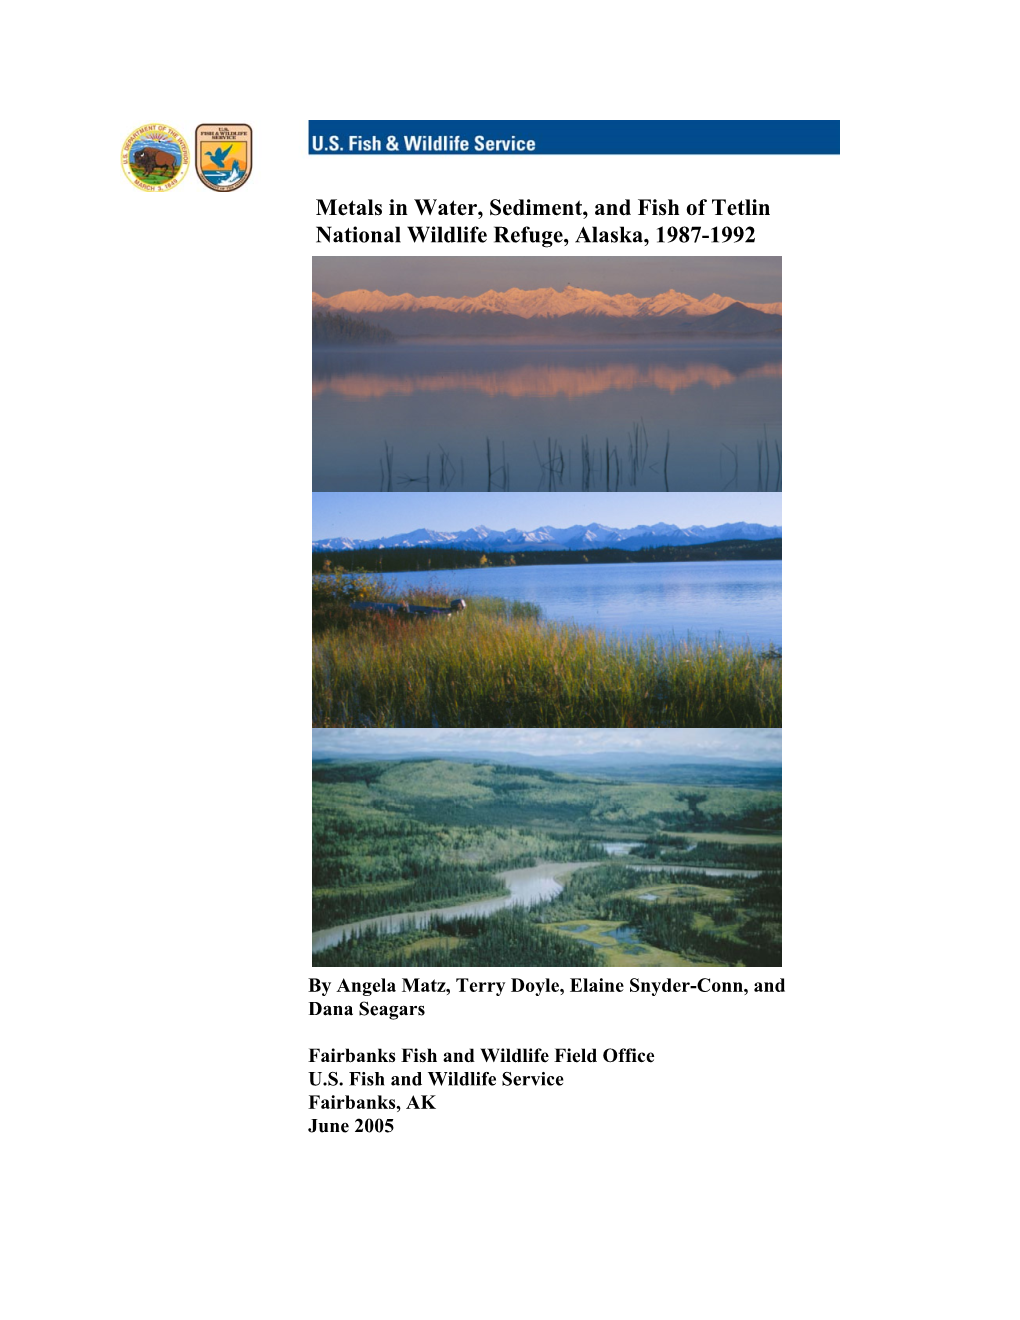 Metals in Water, Sediment, and Fish of Tetlin National Wildlife Refuge, Alaska, 1987-1992